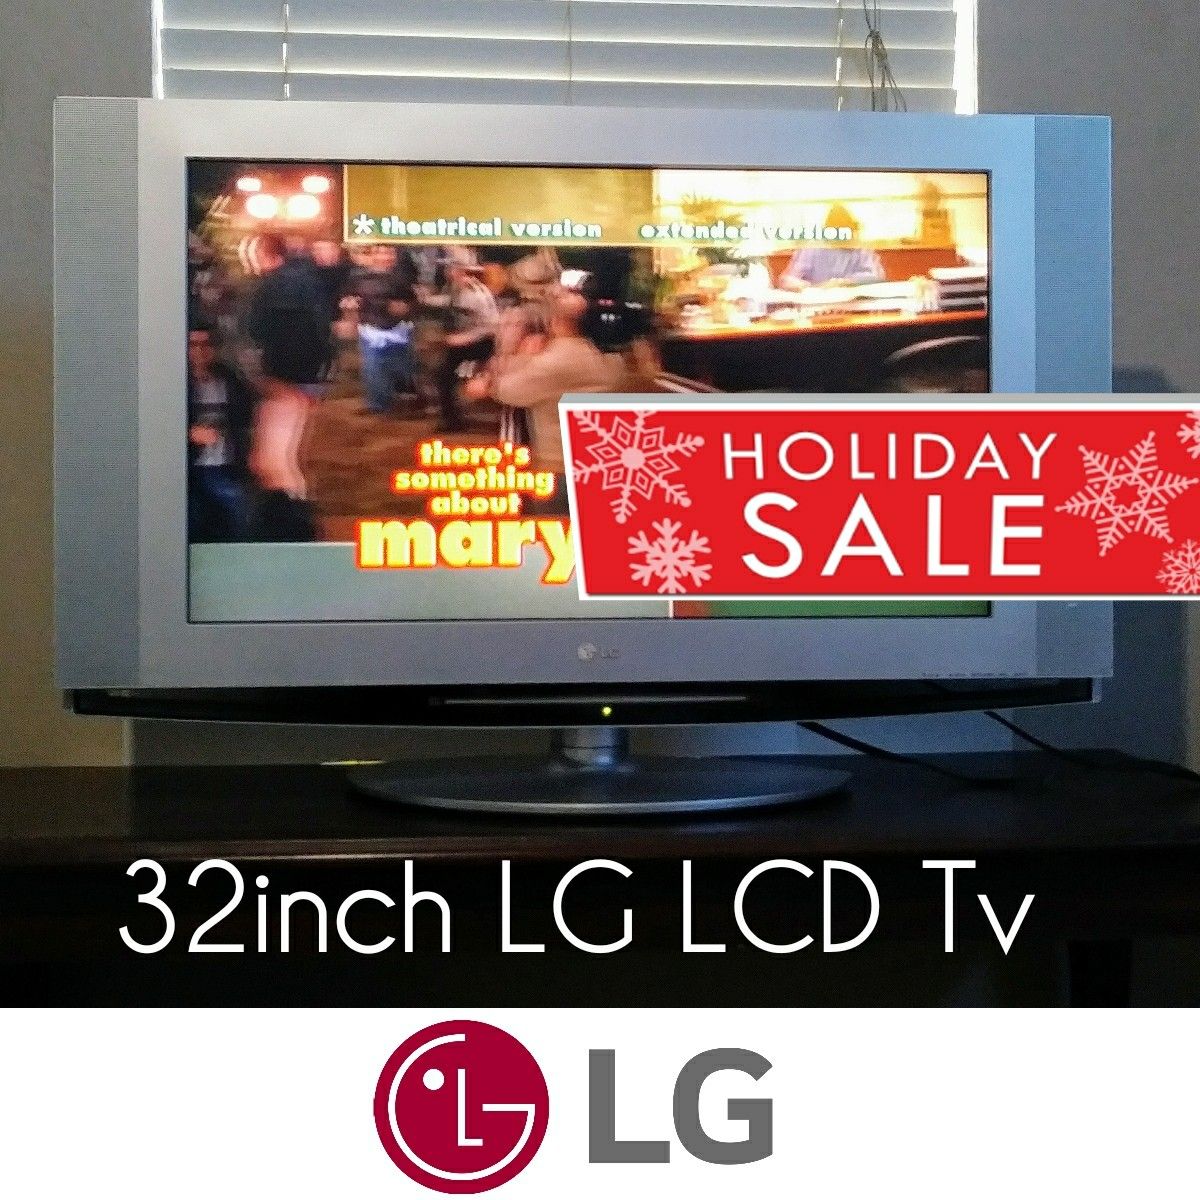 32 inch LG Flat screen TV